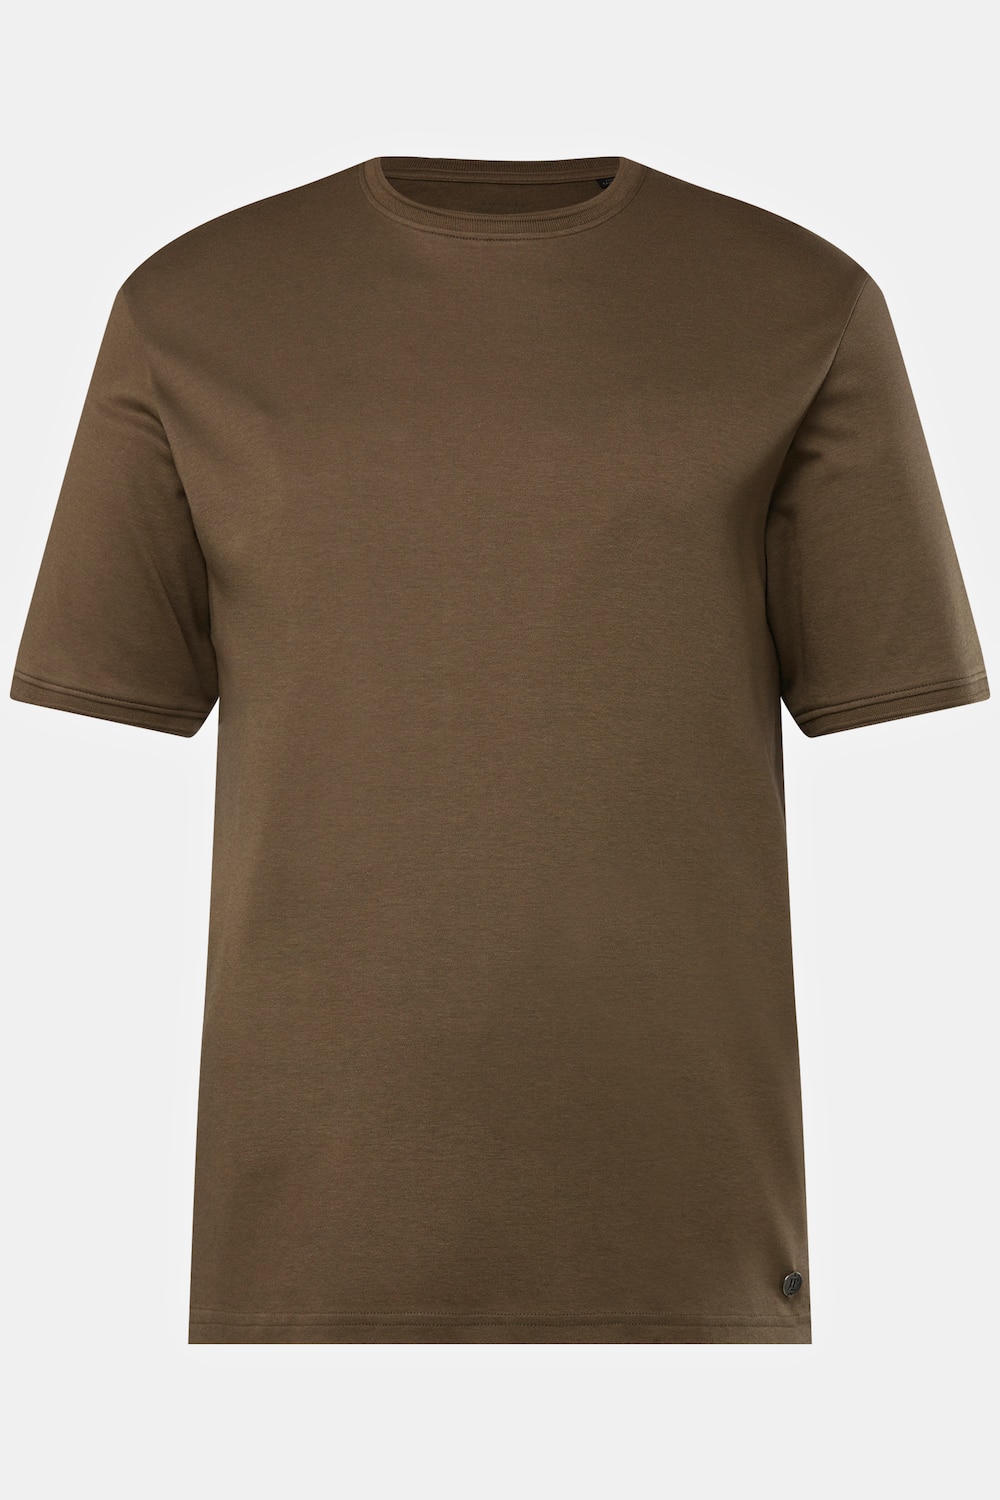 Grote Maten T-shirt, Heren, bruin, Maat: 7XL, Katoen/Viscose, JP1880